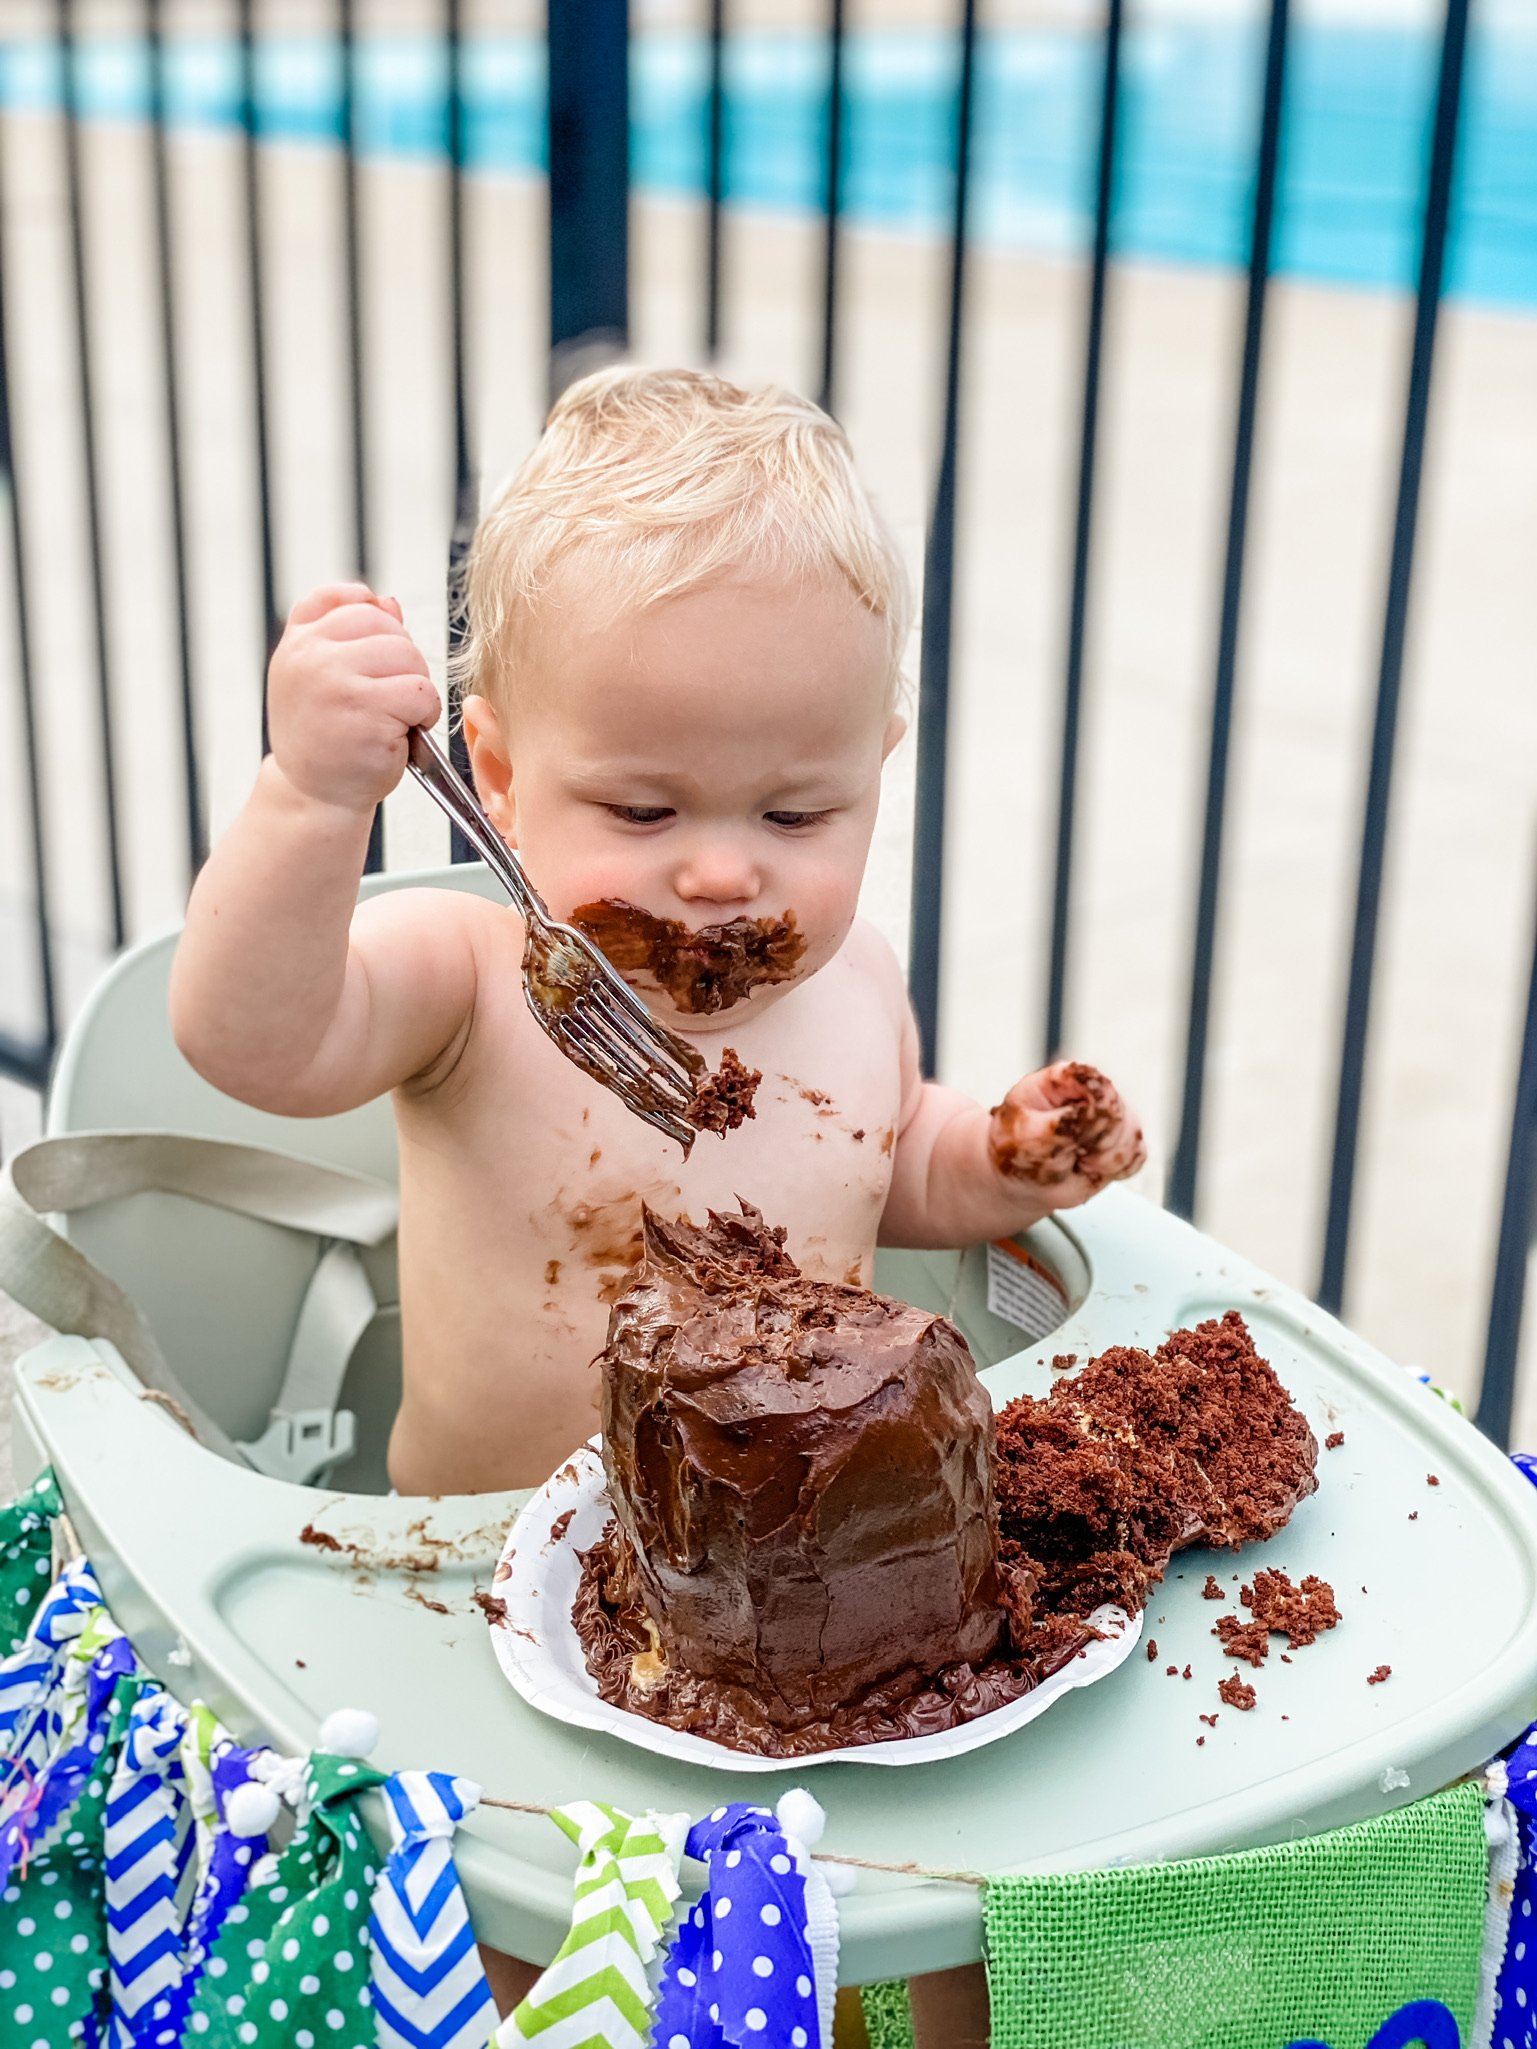 Baby destroying cake